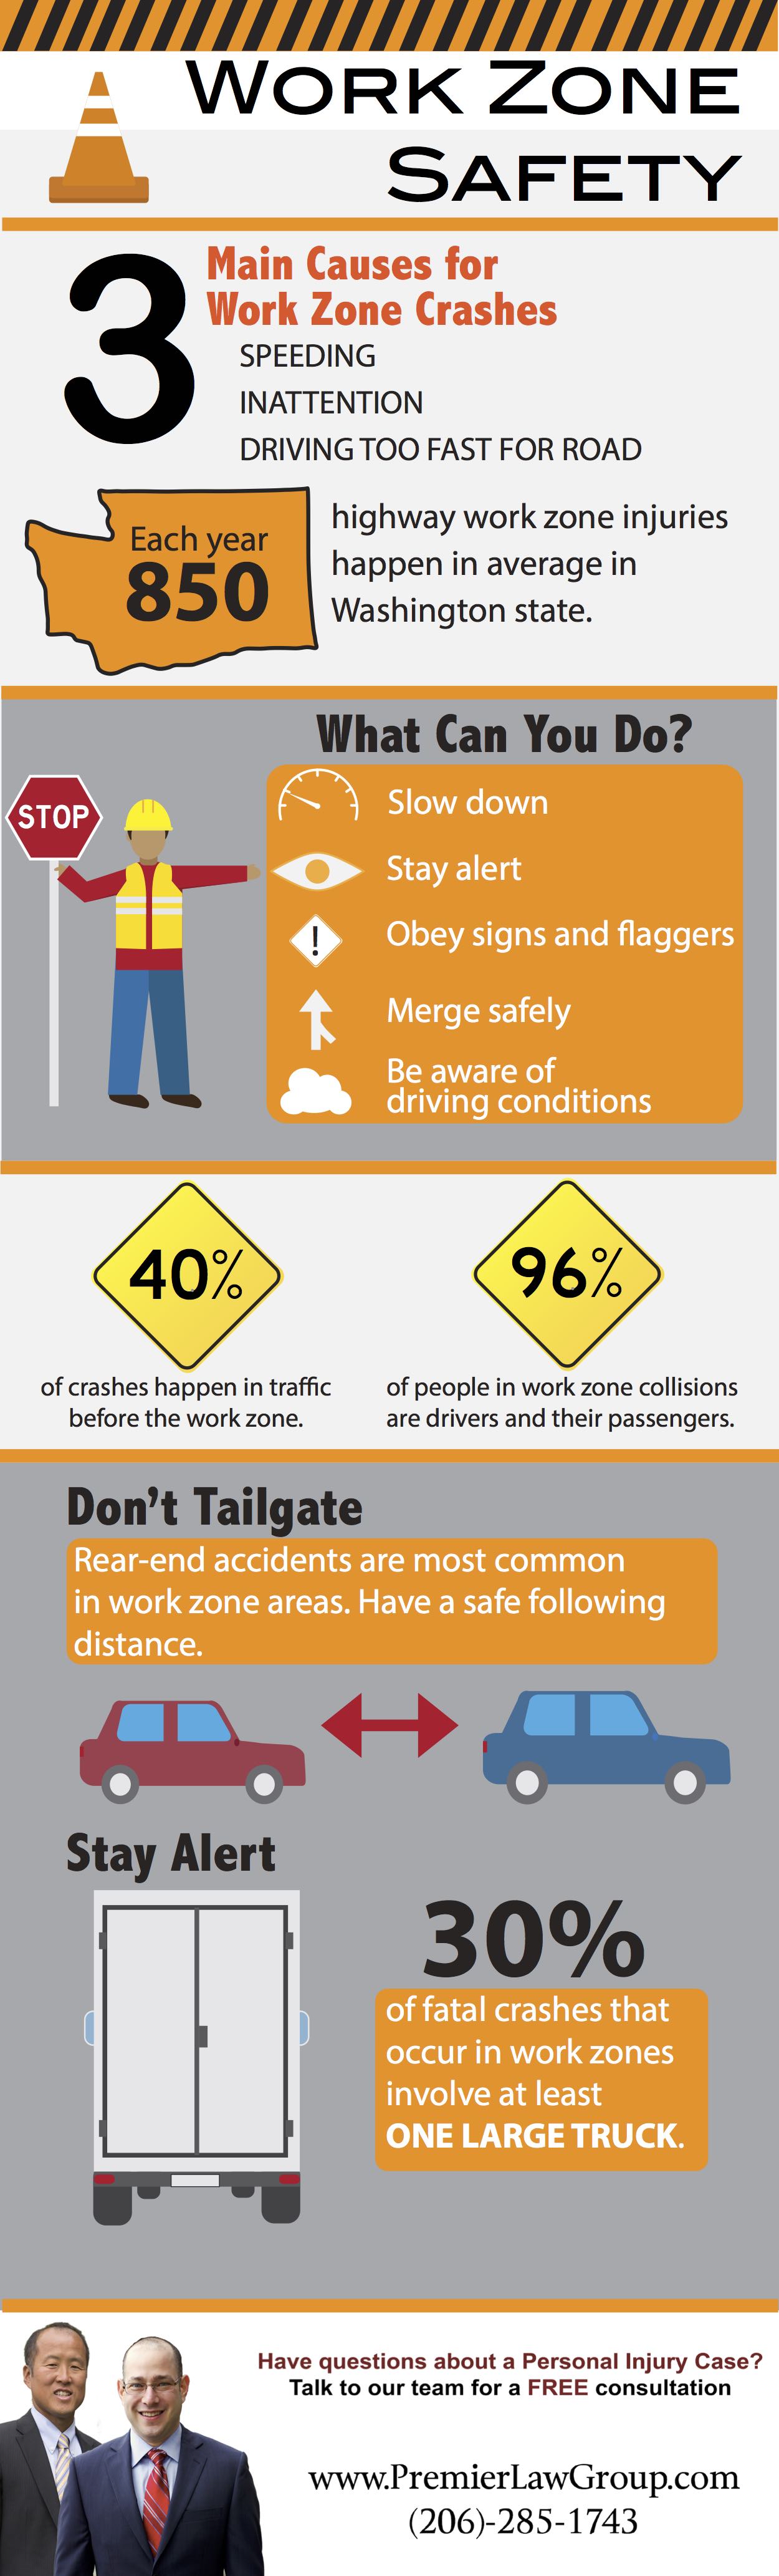 Work Zone Safety infographic